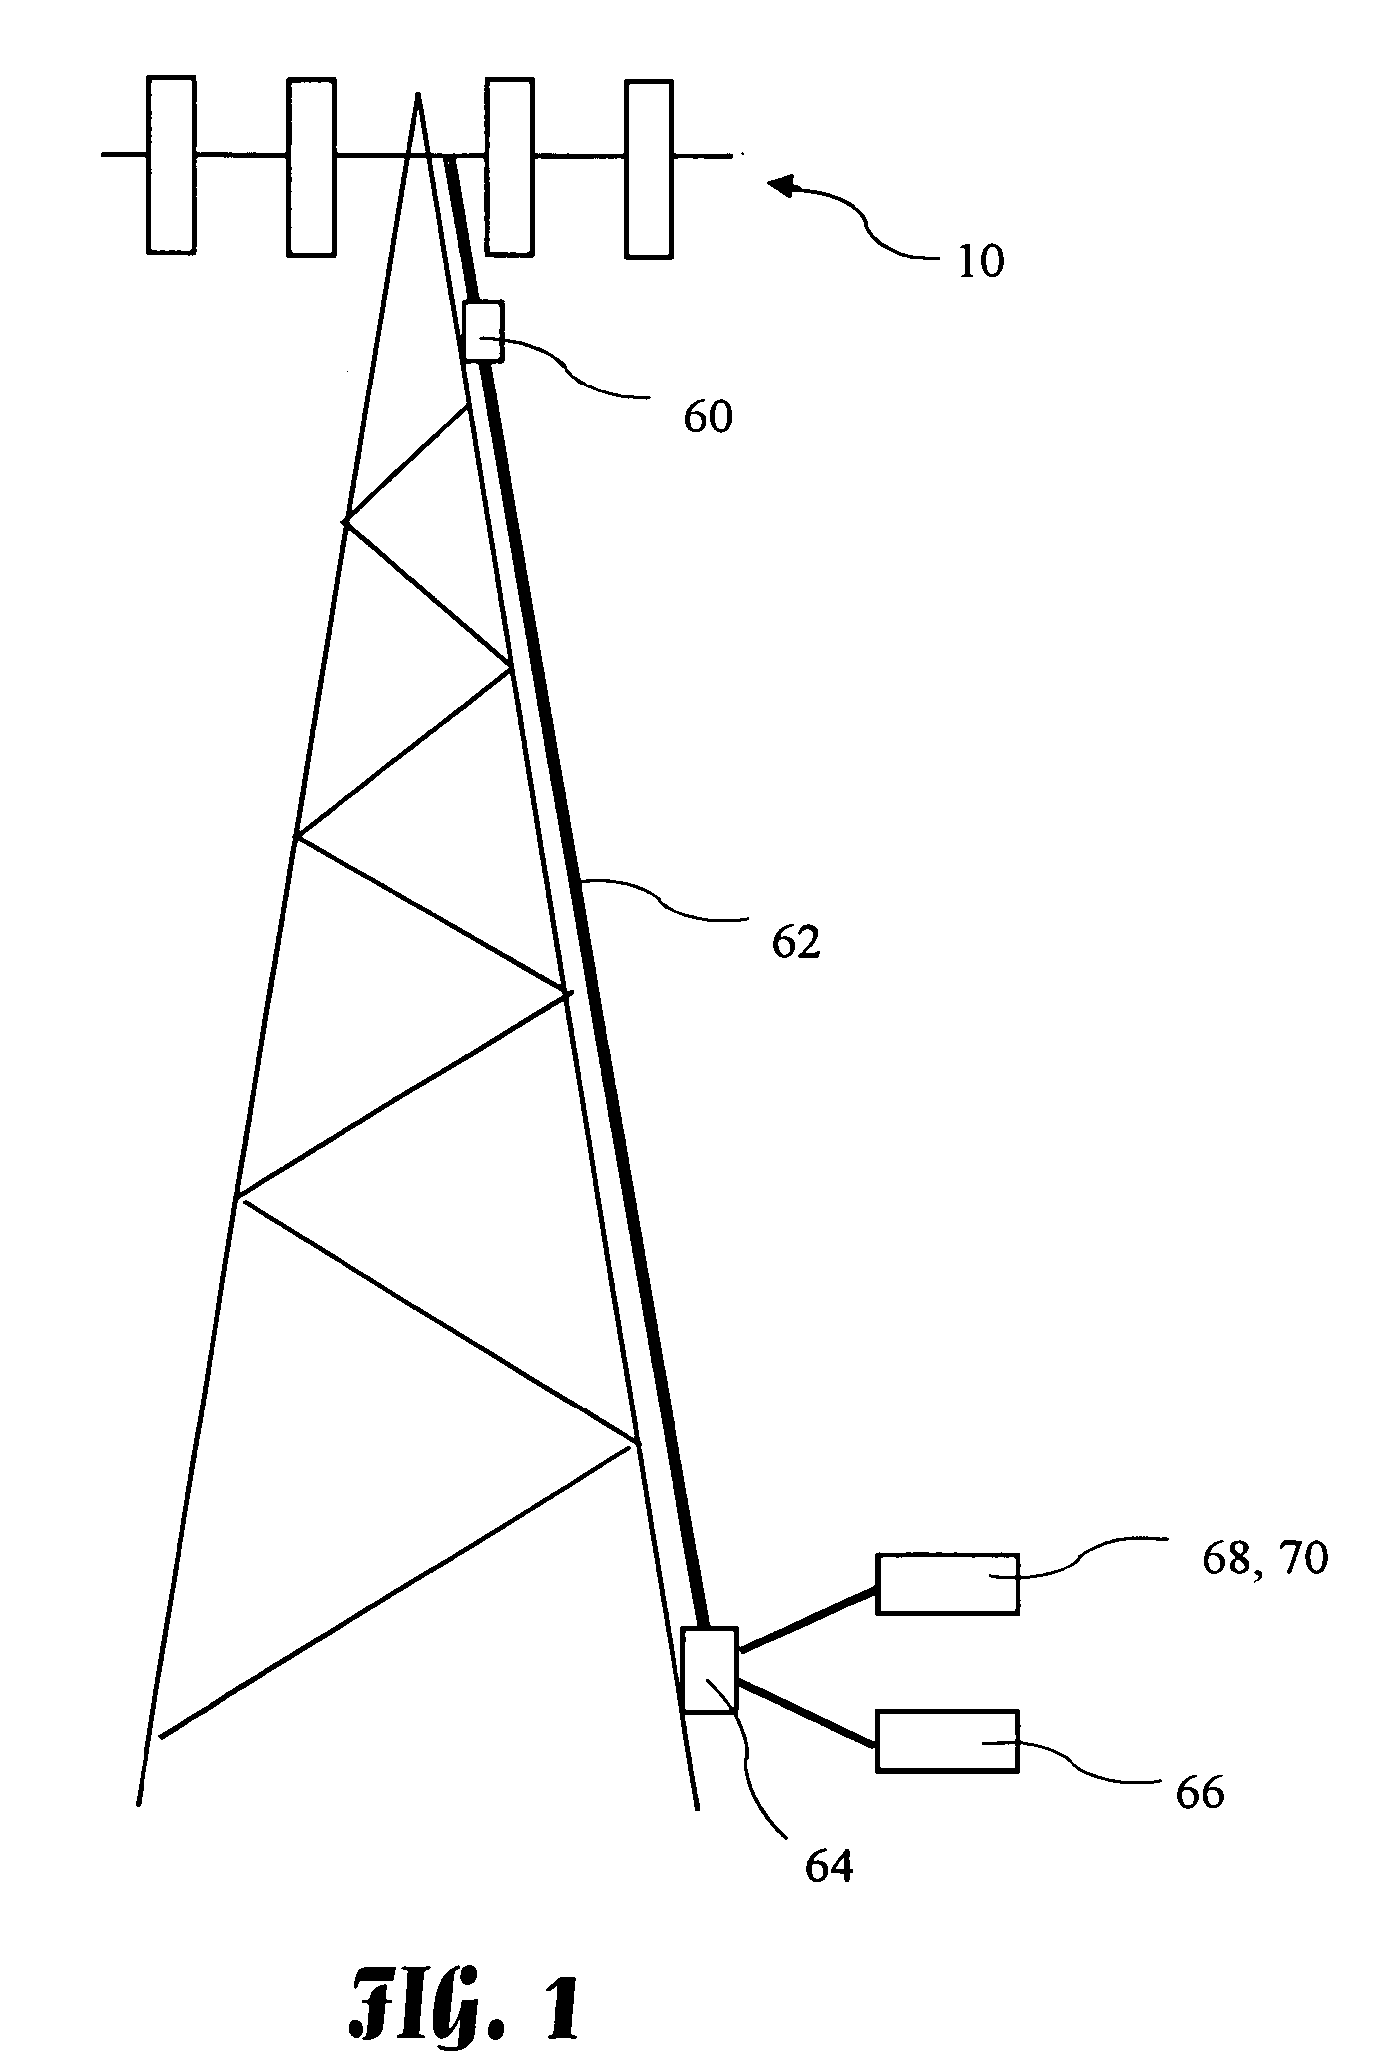 System for remotely adjusting antennas